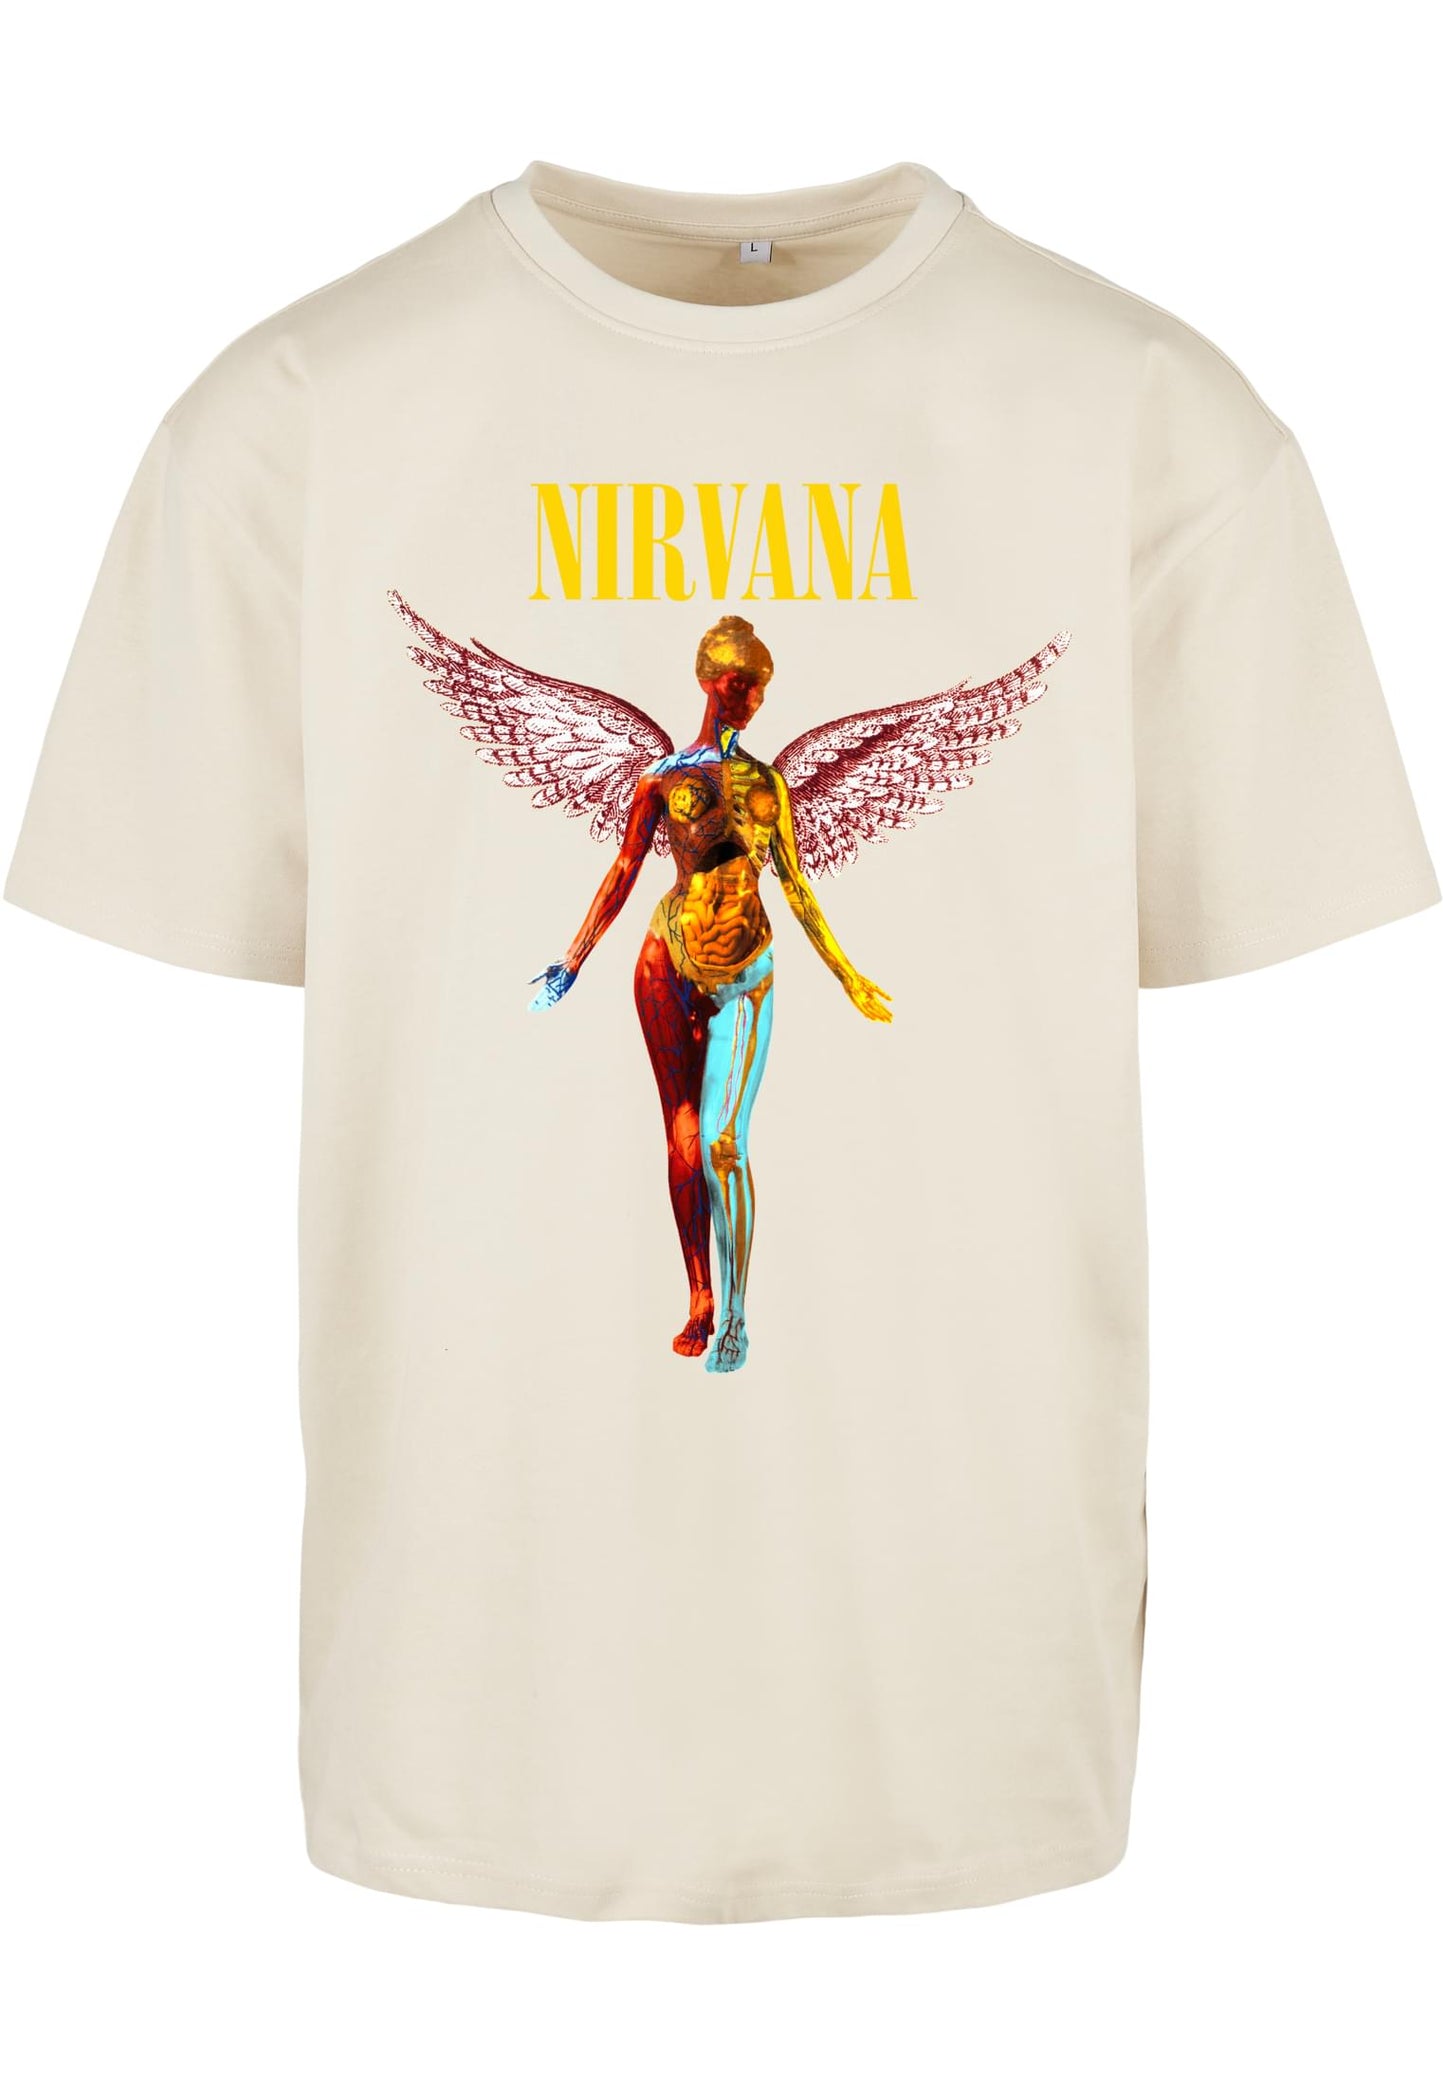 Nirvana In Utero Oversize T-Shirt